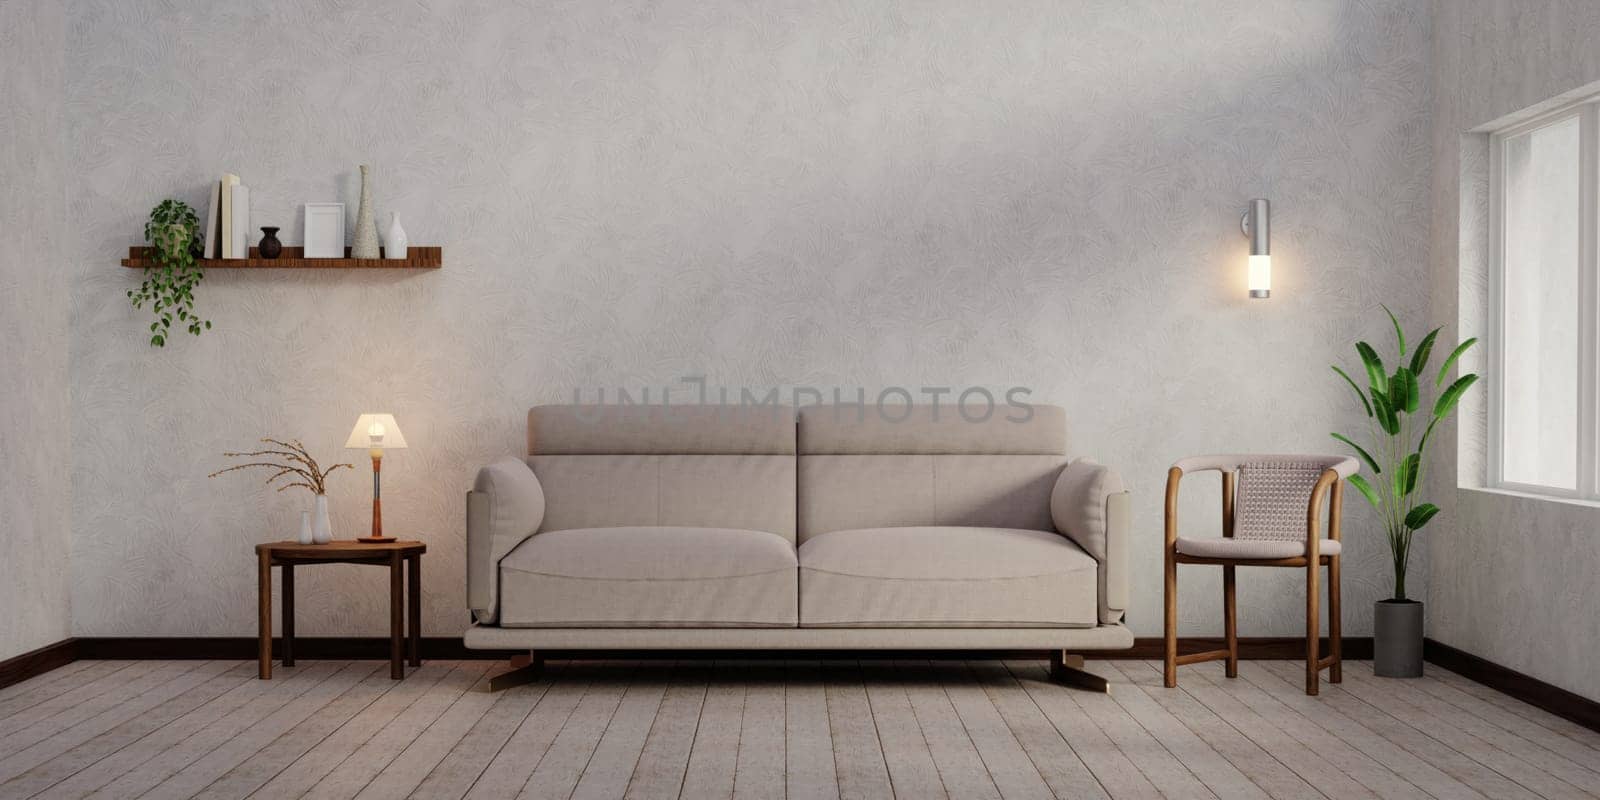 living room interior, beige sofa, lamp, plant. modern living room interior background, beige sofa. 3d rendering illustration by meepiangraphic